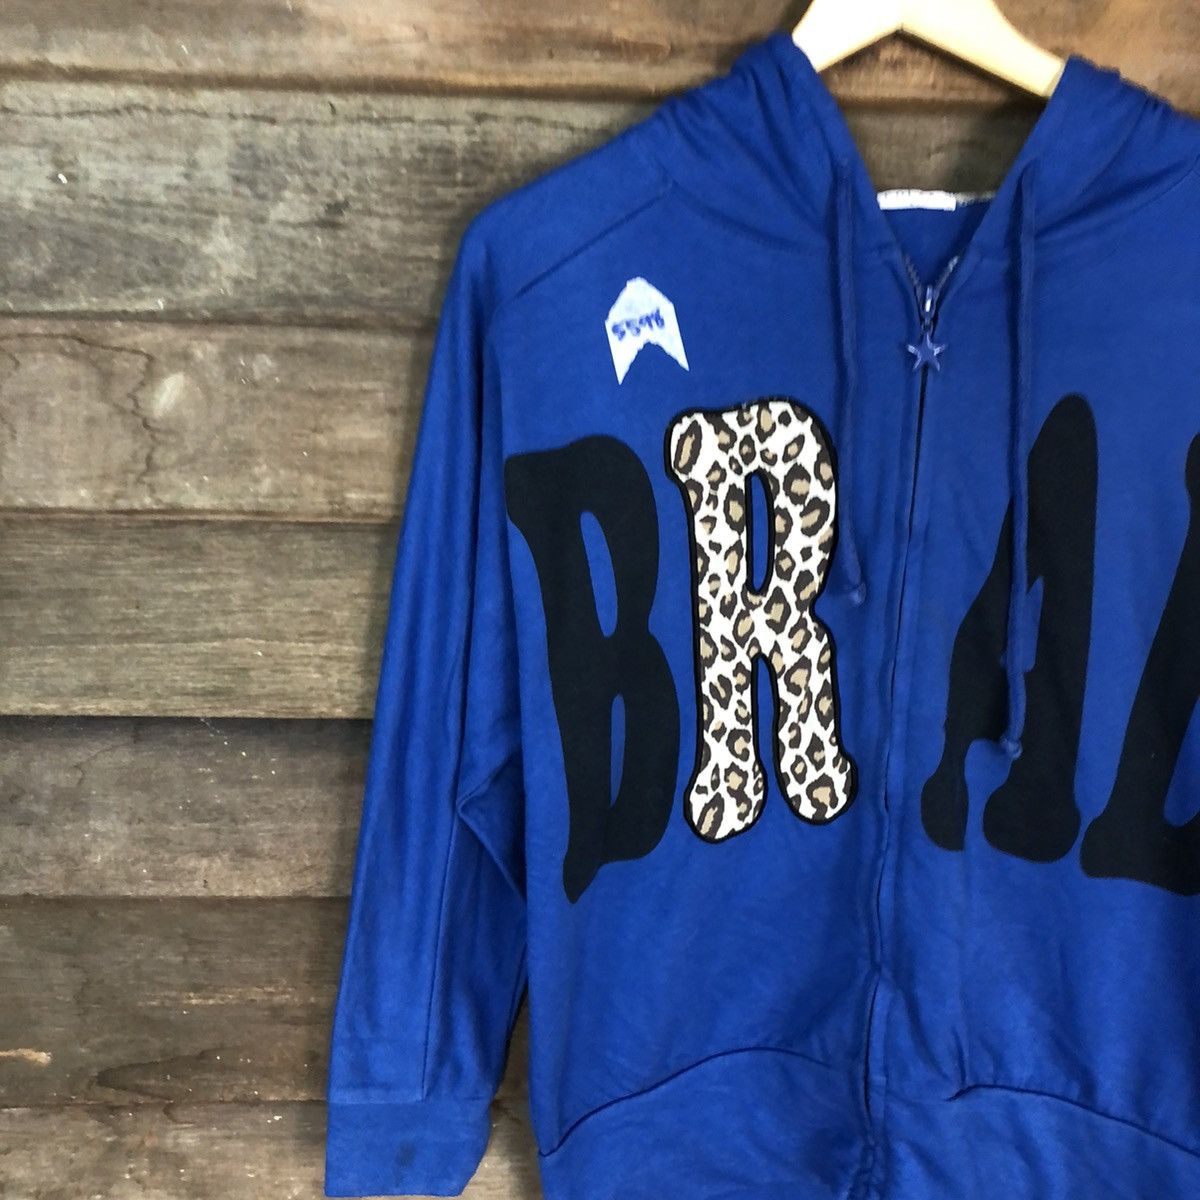 Japanese Brand Colza Brad Blue sweater ear Hoodies #5598 Size S / US 4 / IT 40 - 7 Thumbnail